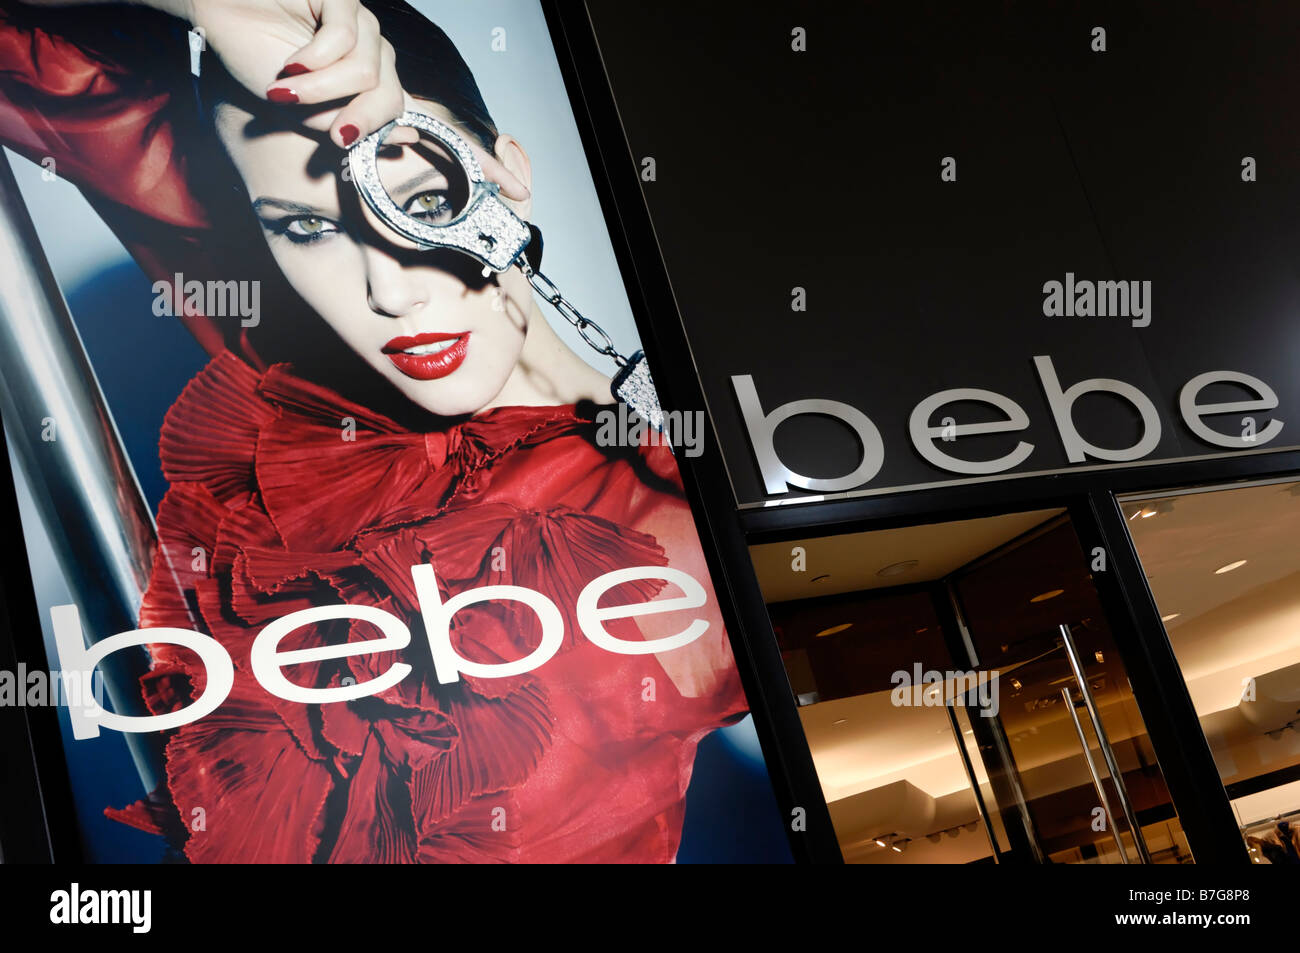 https://c8.alamy.com/comp/B7G8P8/bebe-fashion-store-B7G8P8.jpg